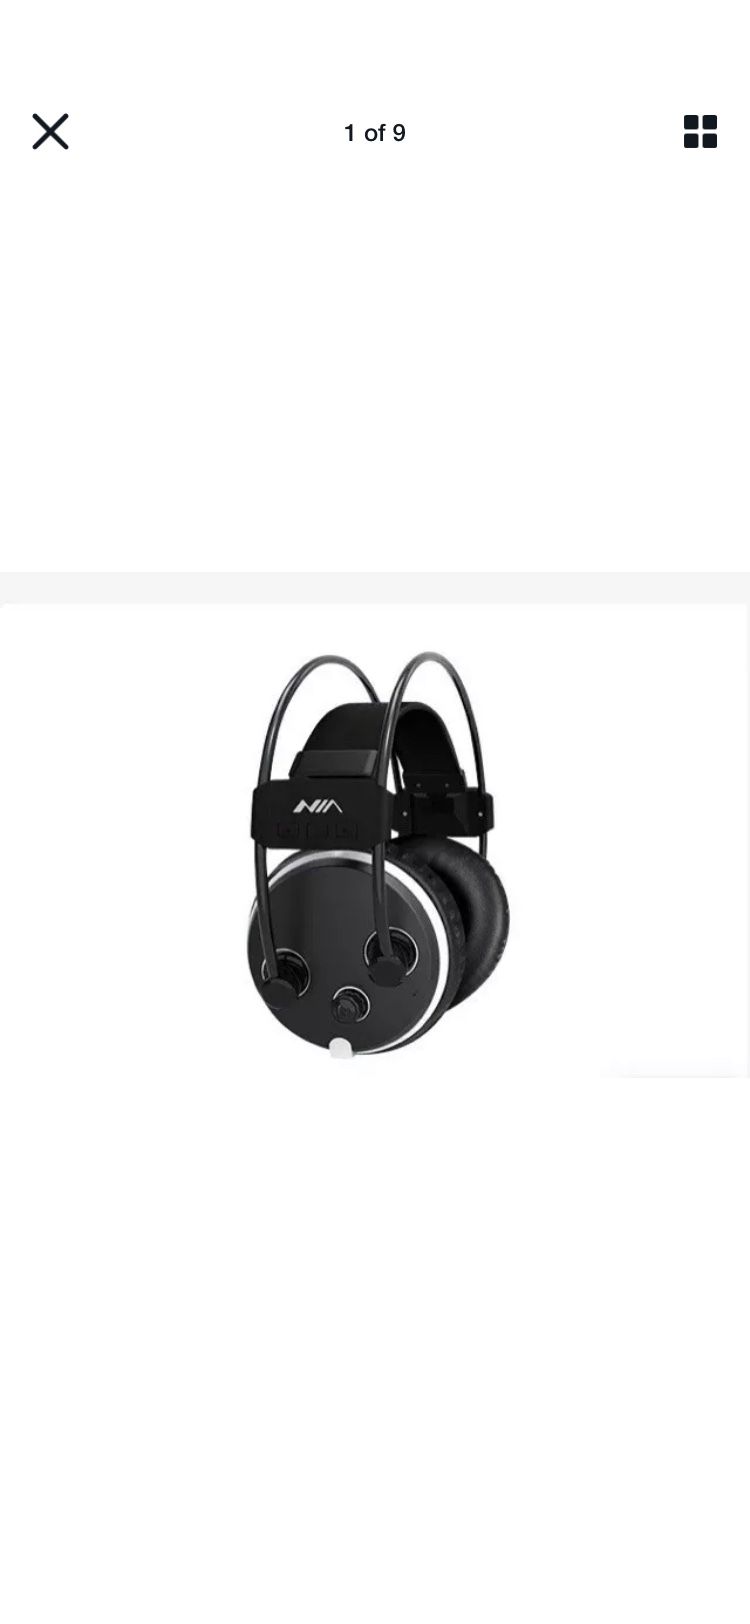 Nia s1000 Wireless Noise Canceling Over-Ear Headphones w/micro sd/fm radio black